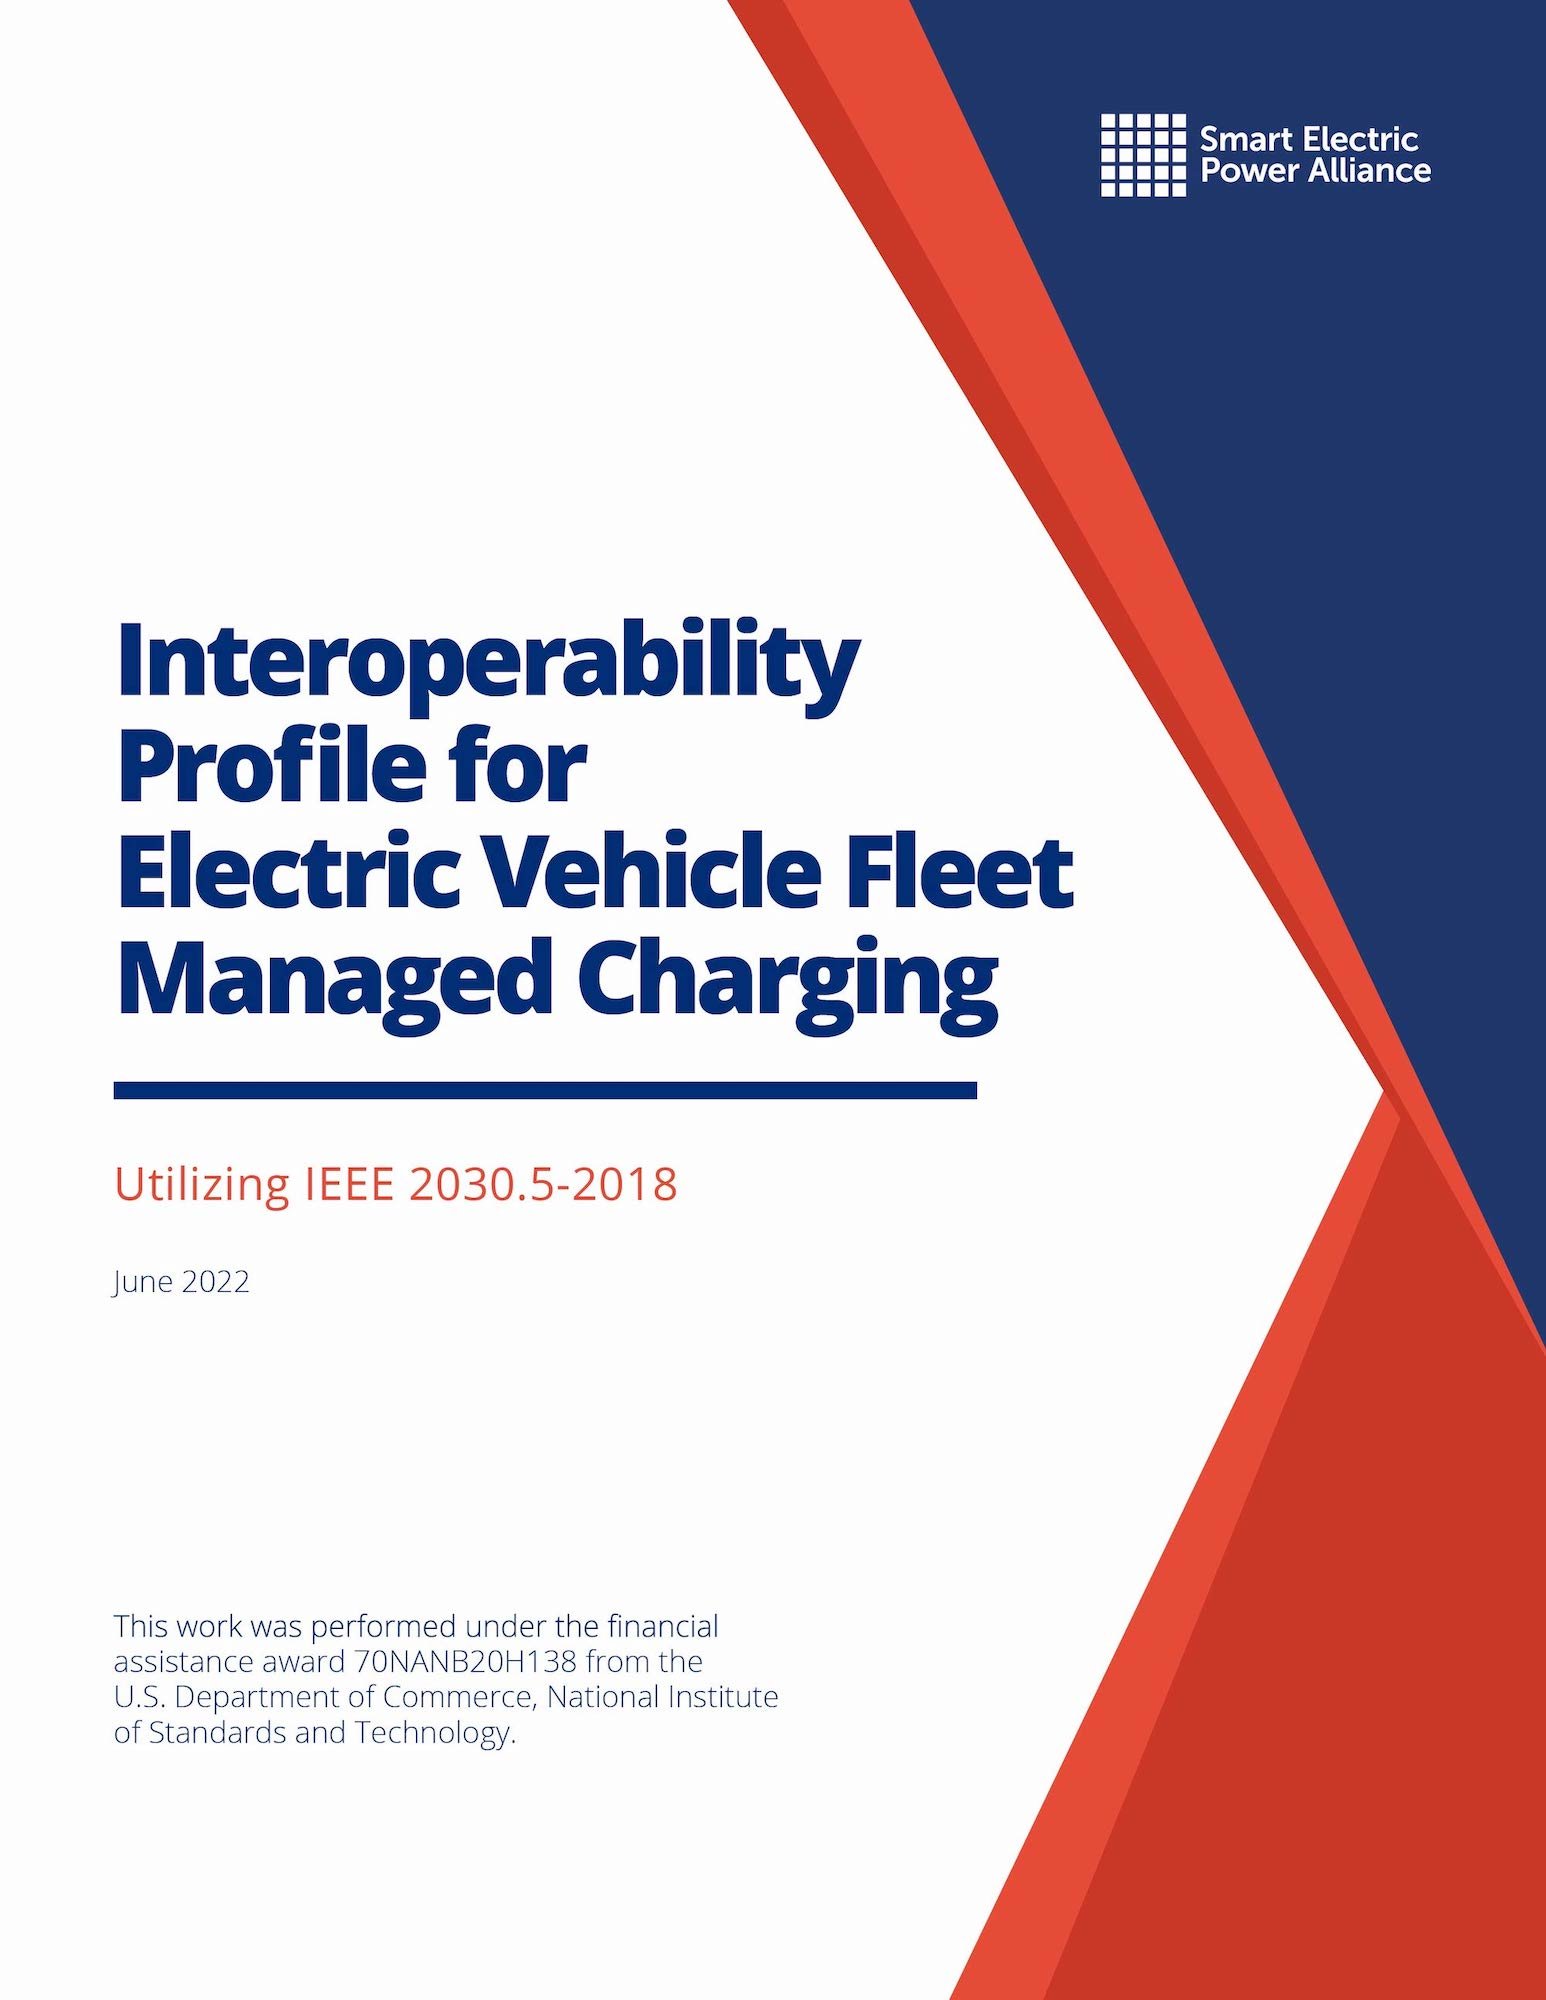 Interoperability Profile for Electric Vehicle Fleet Managed Charging